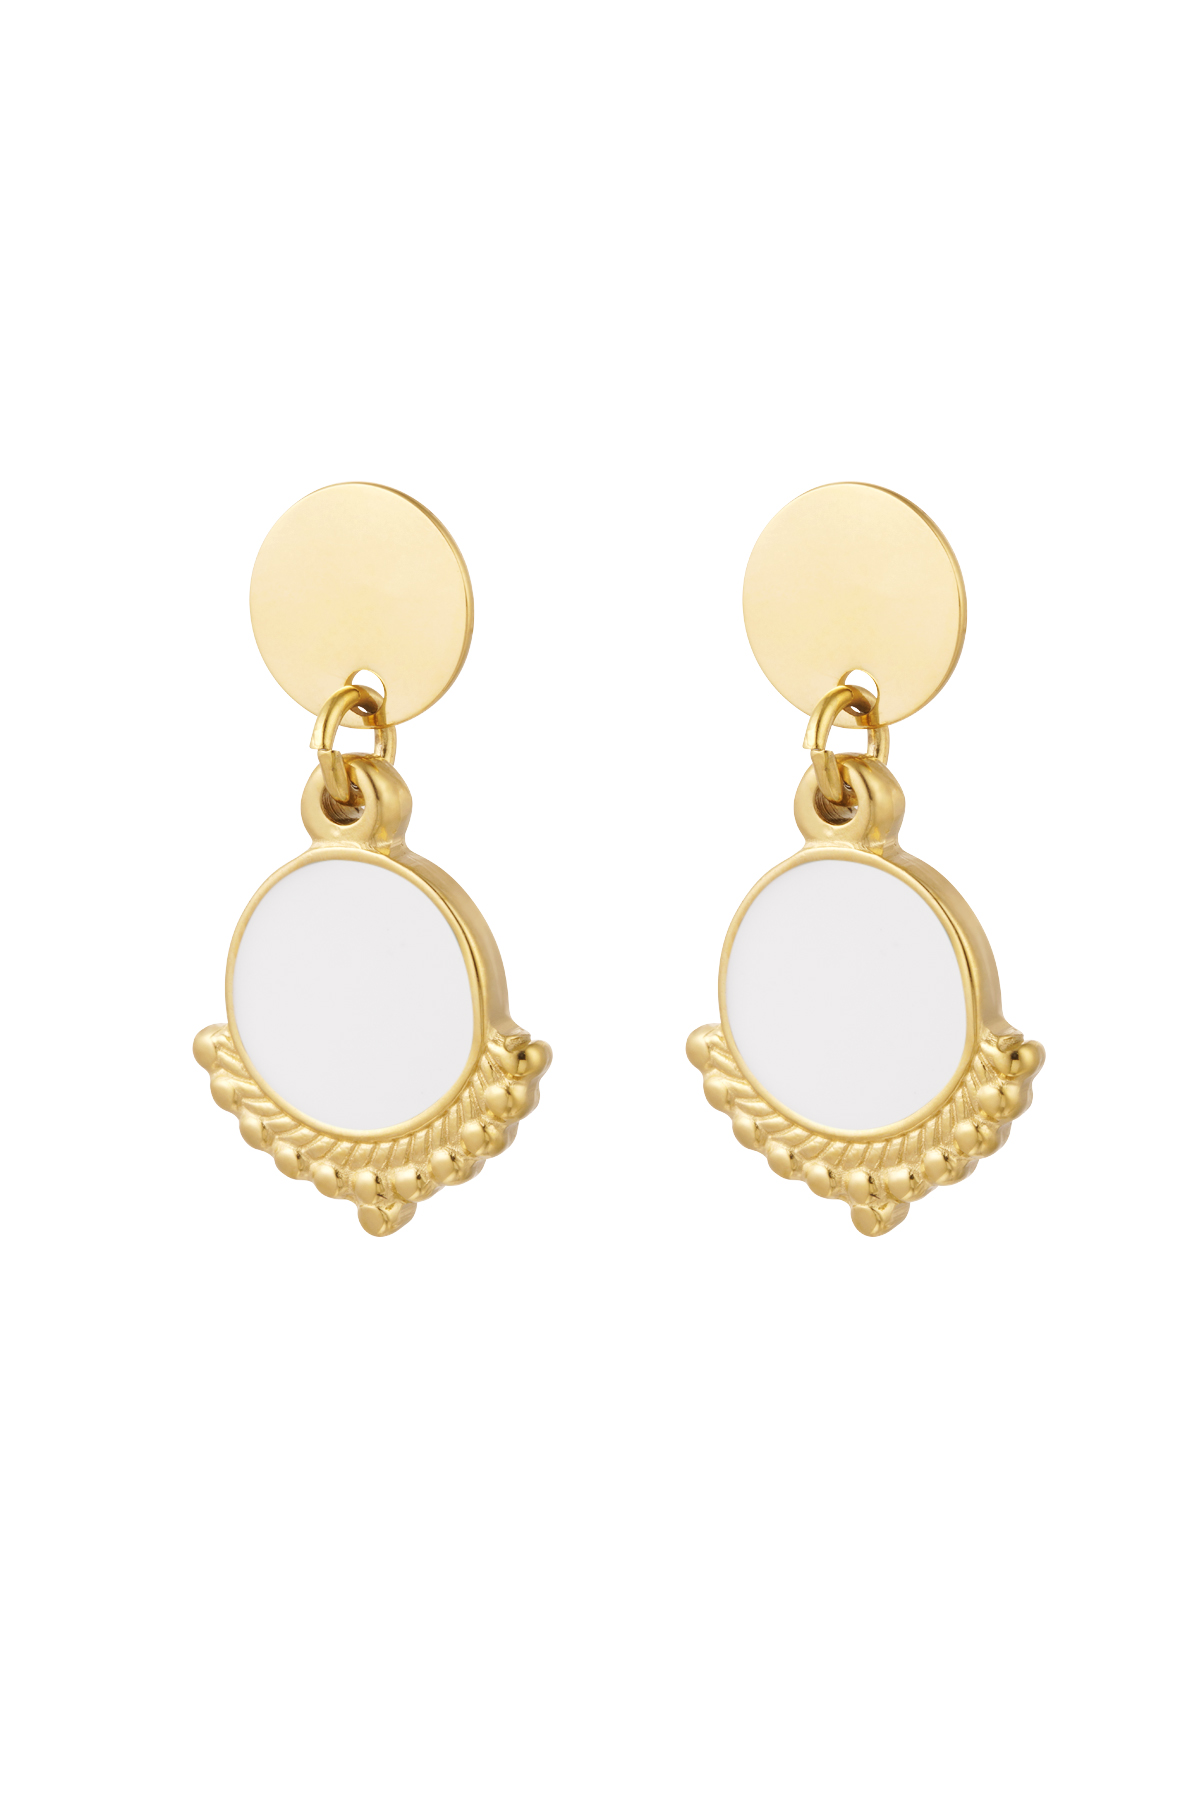 Ohrringe elegant mit Farbe - Gold/Weiß